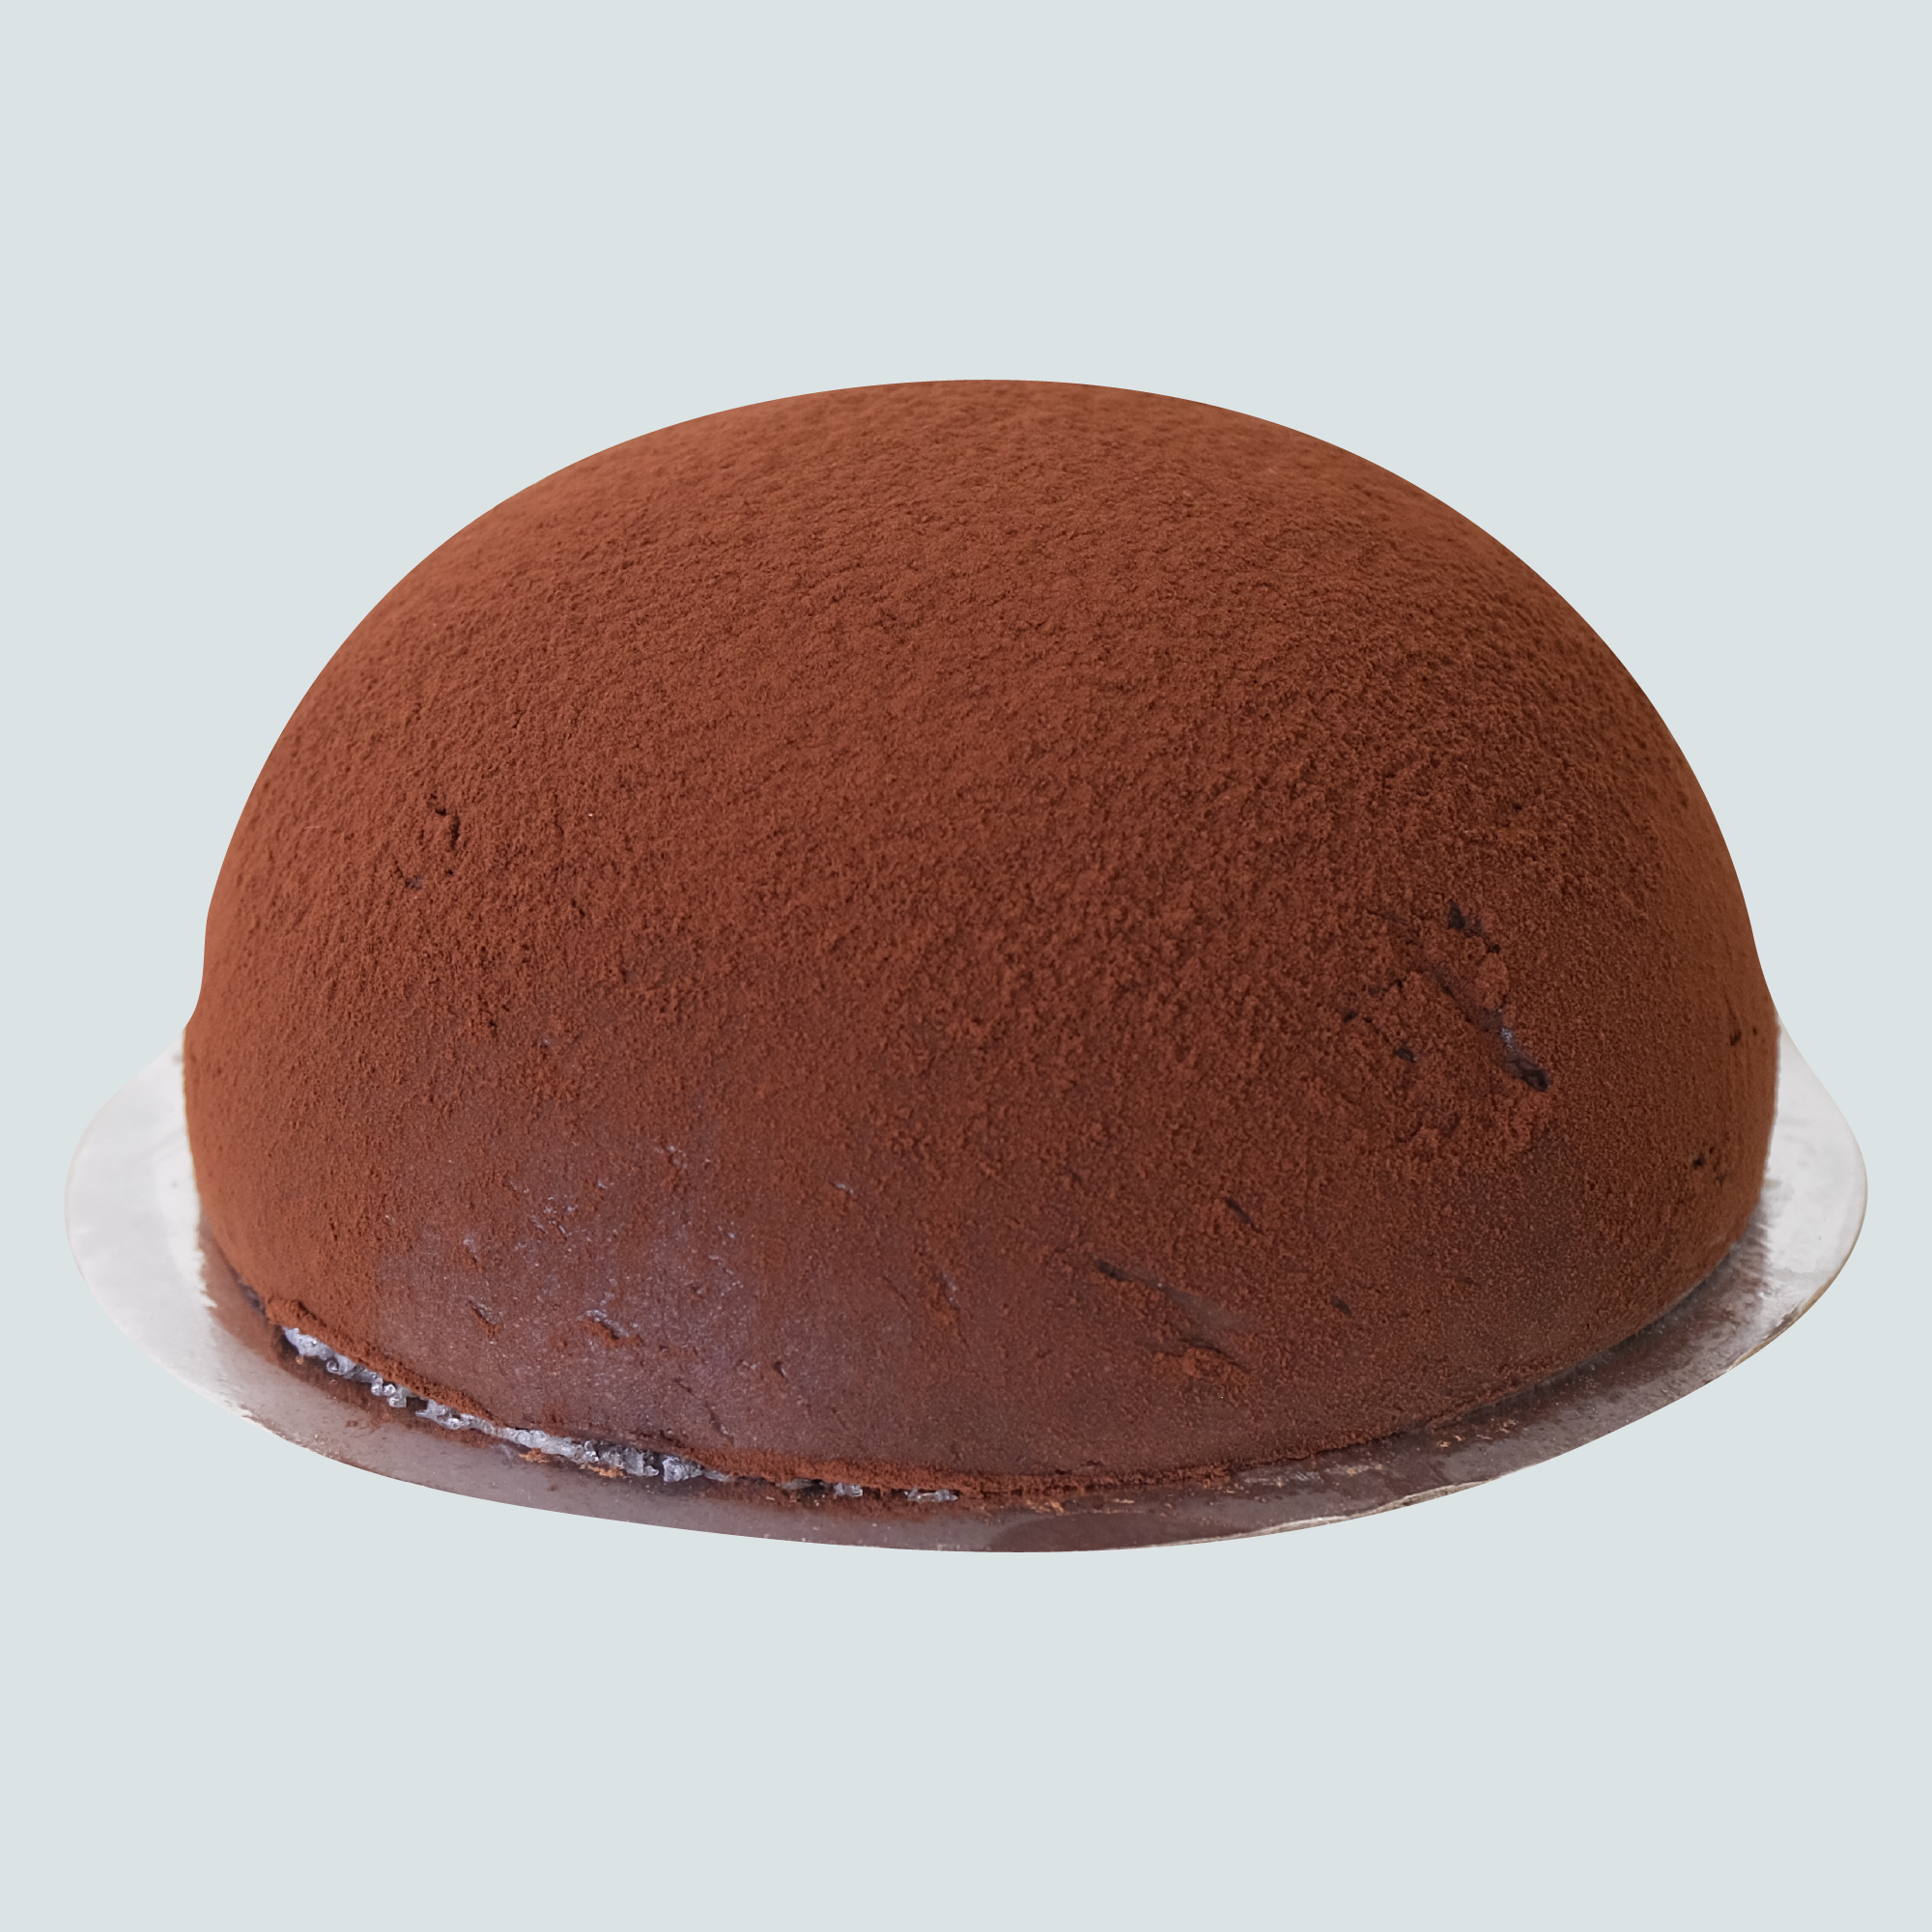 Chocolate-Vanilla Tartufo Is the Dessert Dreams Are Made Of | Recipe |  Desserts, Tartufo recipe, Ice cream recipes